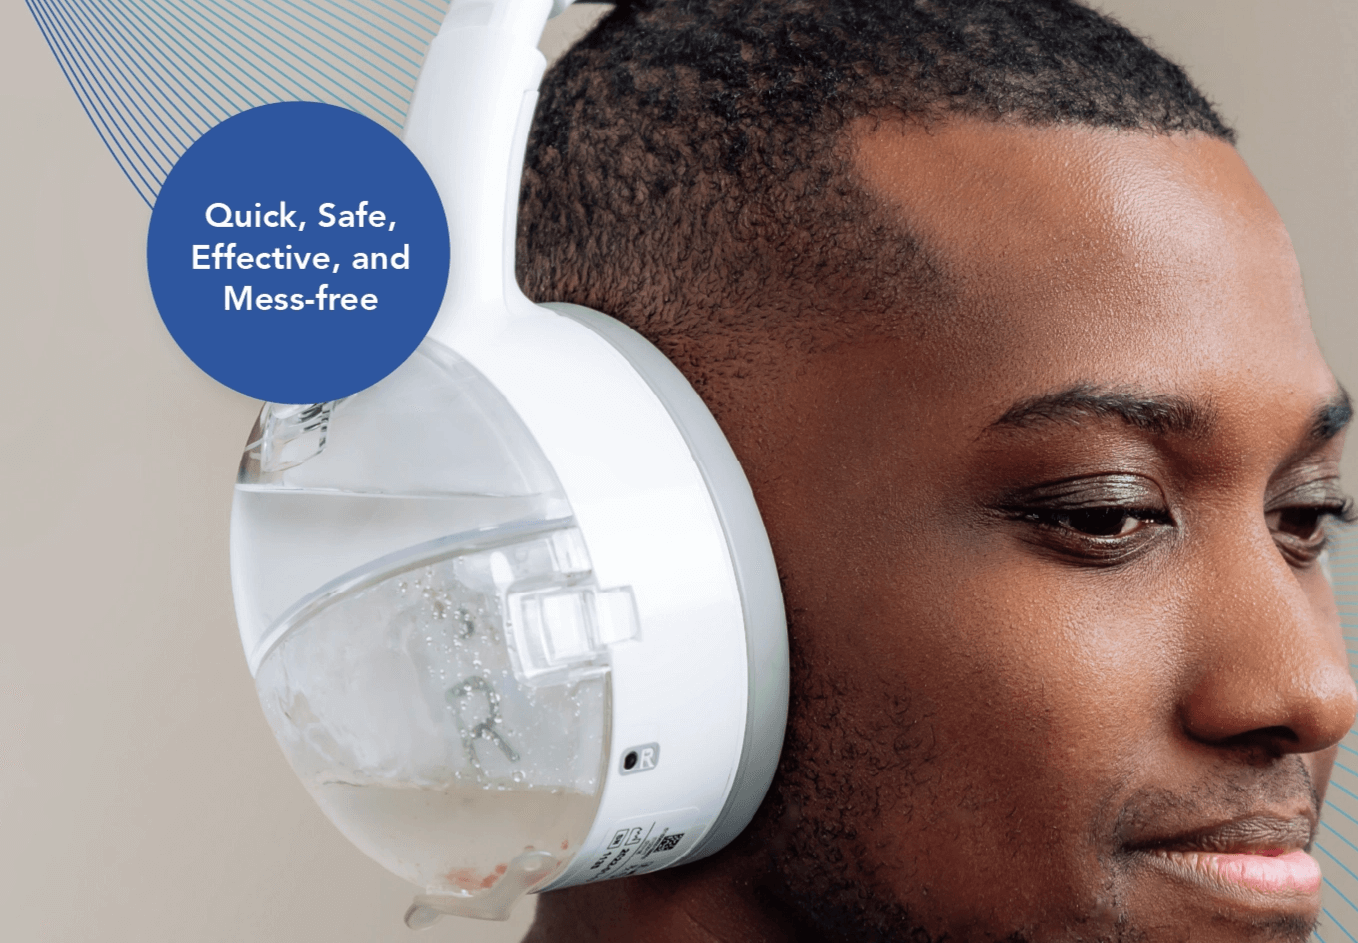 SafKan Health  OtoSet® FDA-Cleared Earwax Removal Device